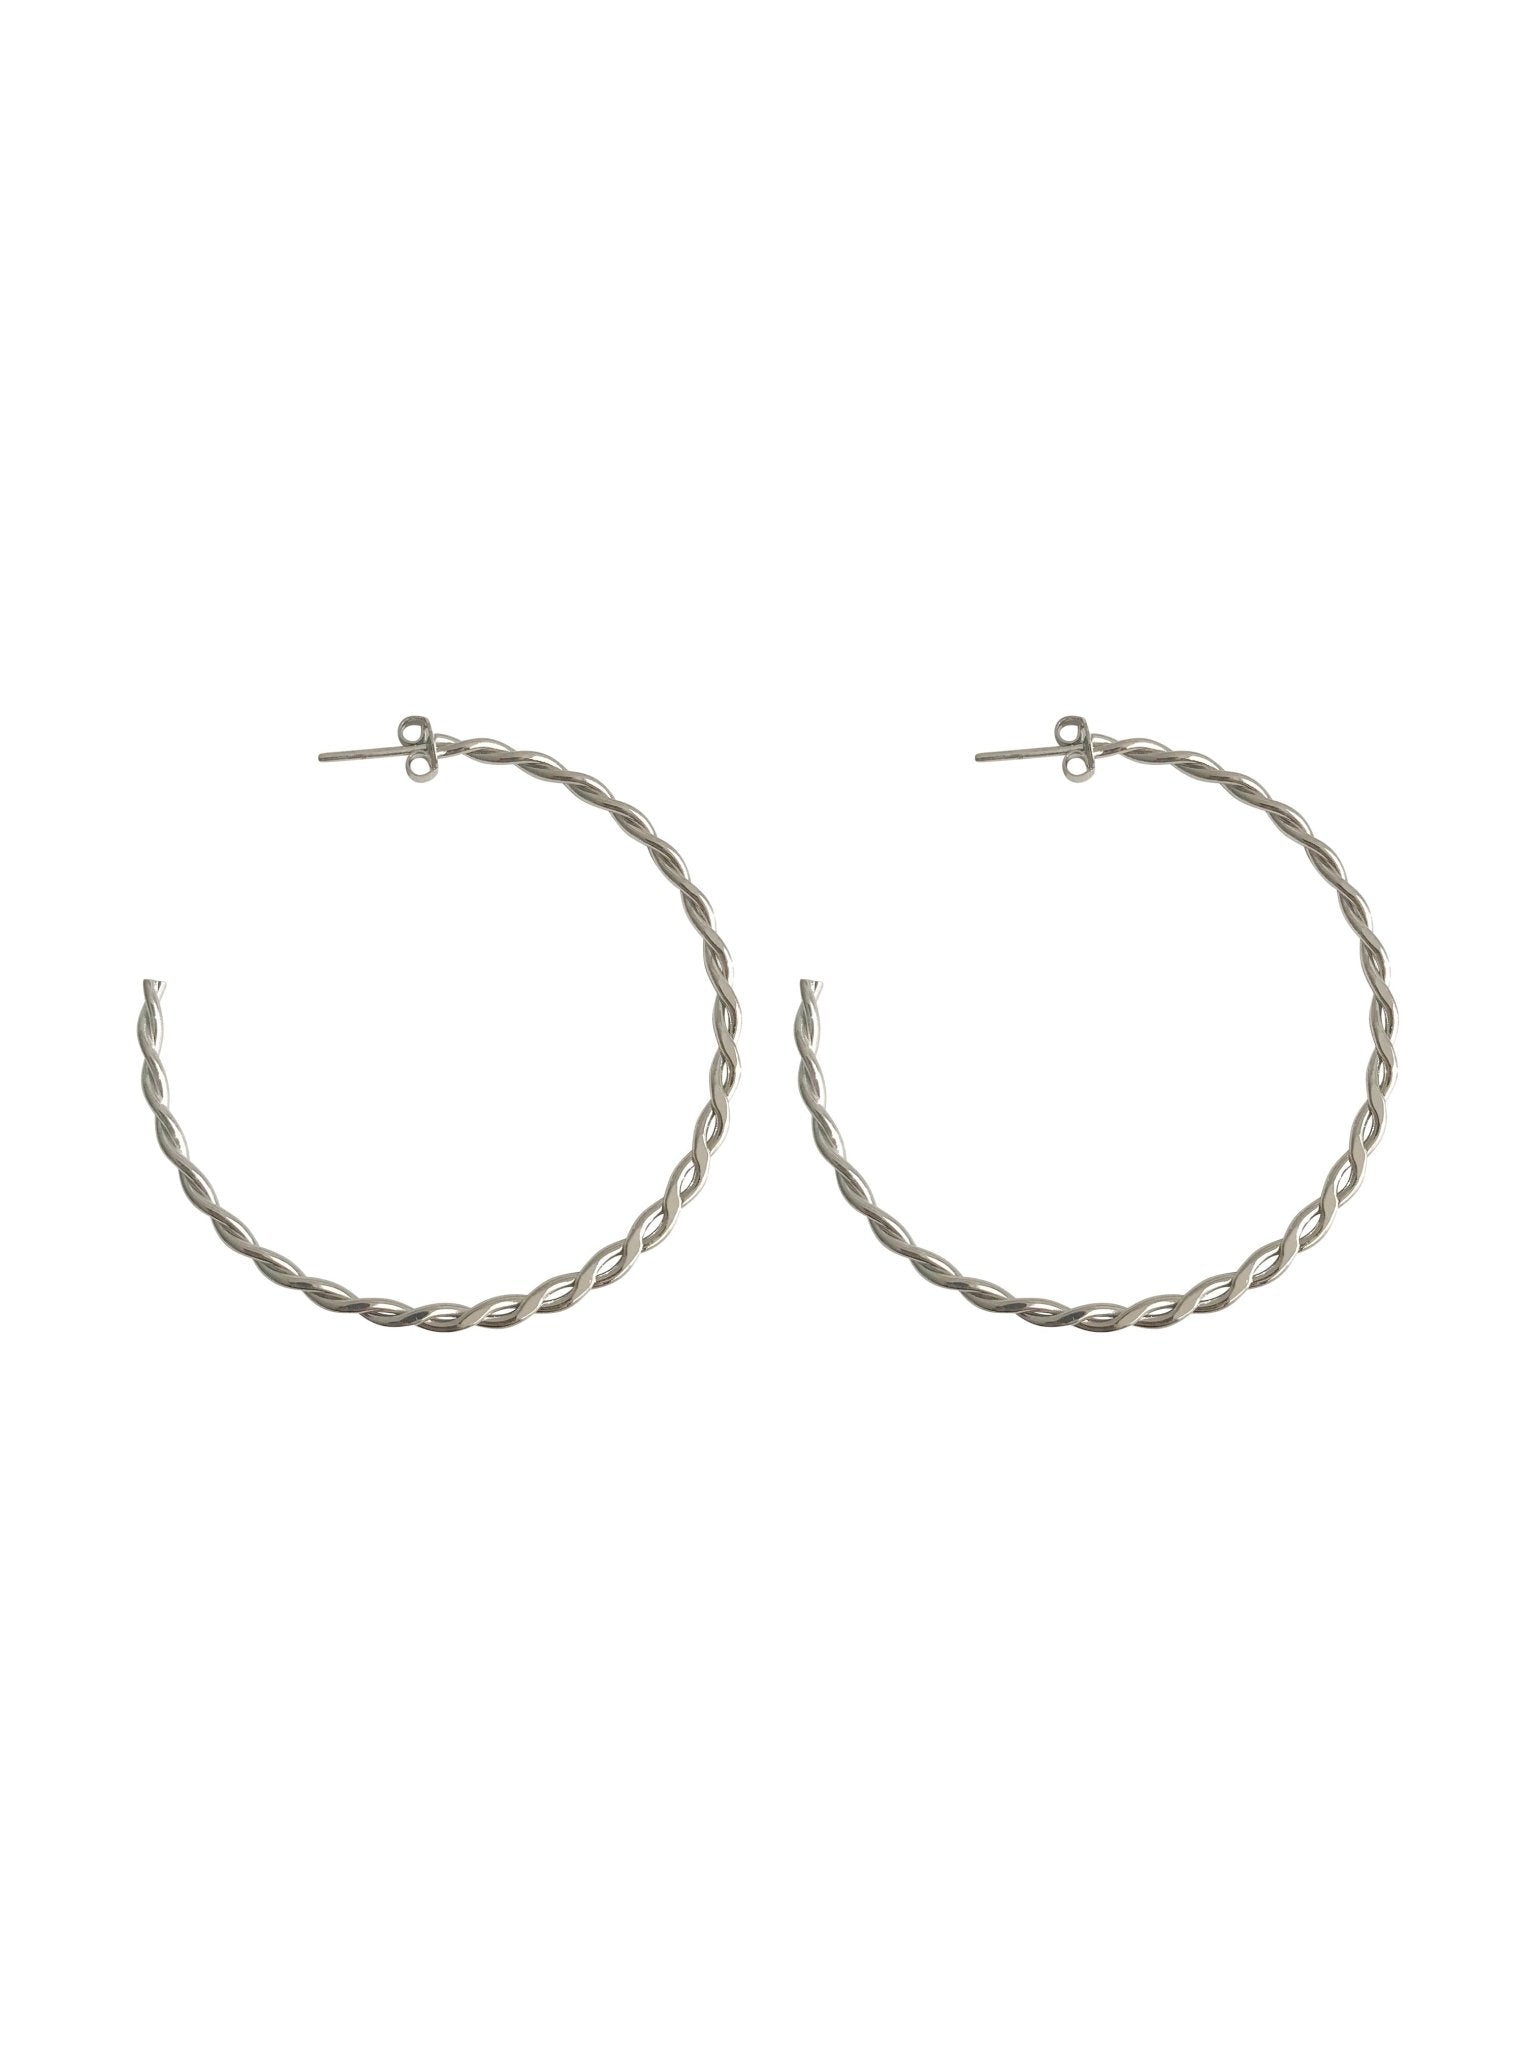 Lara - NOA Jewels - Earrings